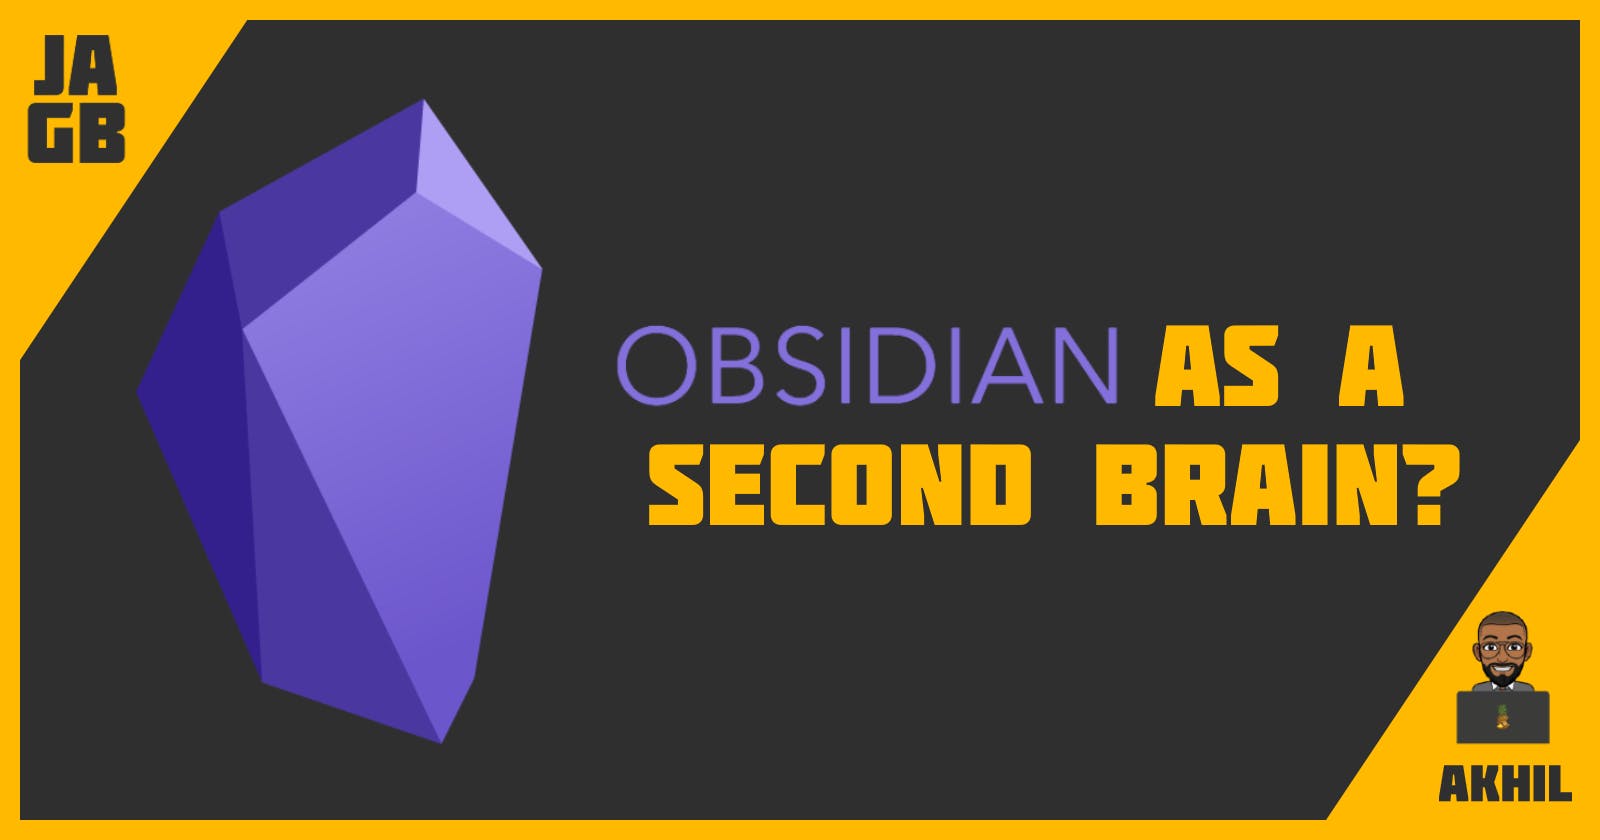 Obsidian as a second brain 🧠 ?